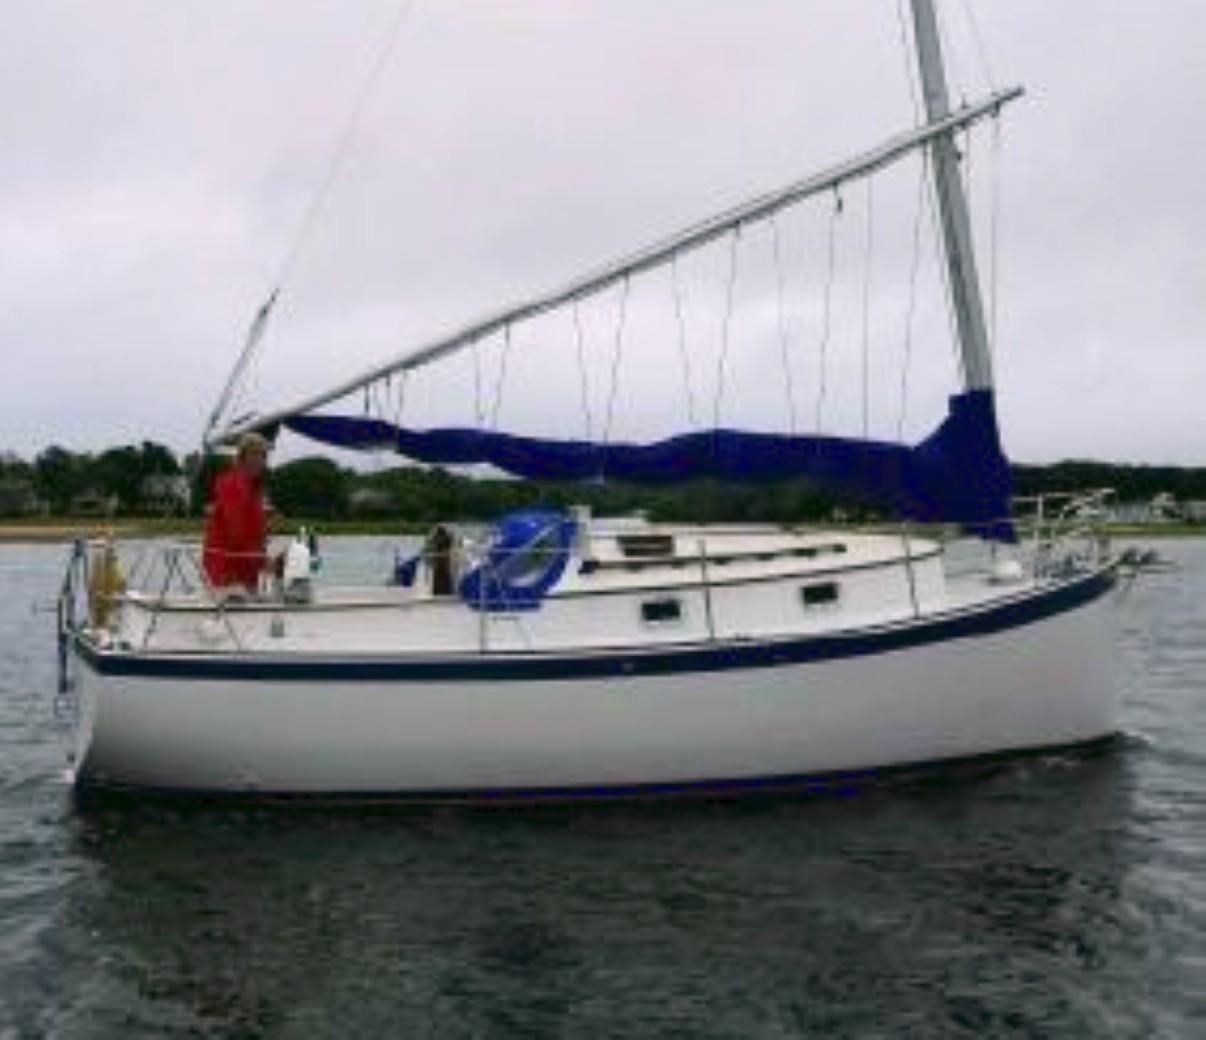 nonsuch 26 sailboat